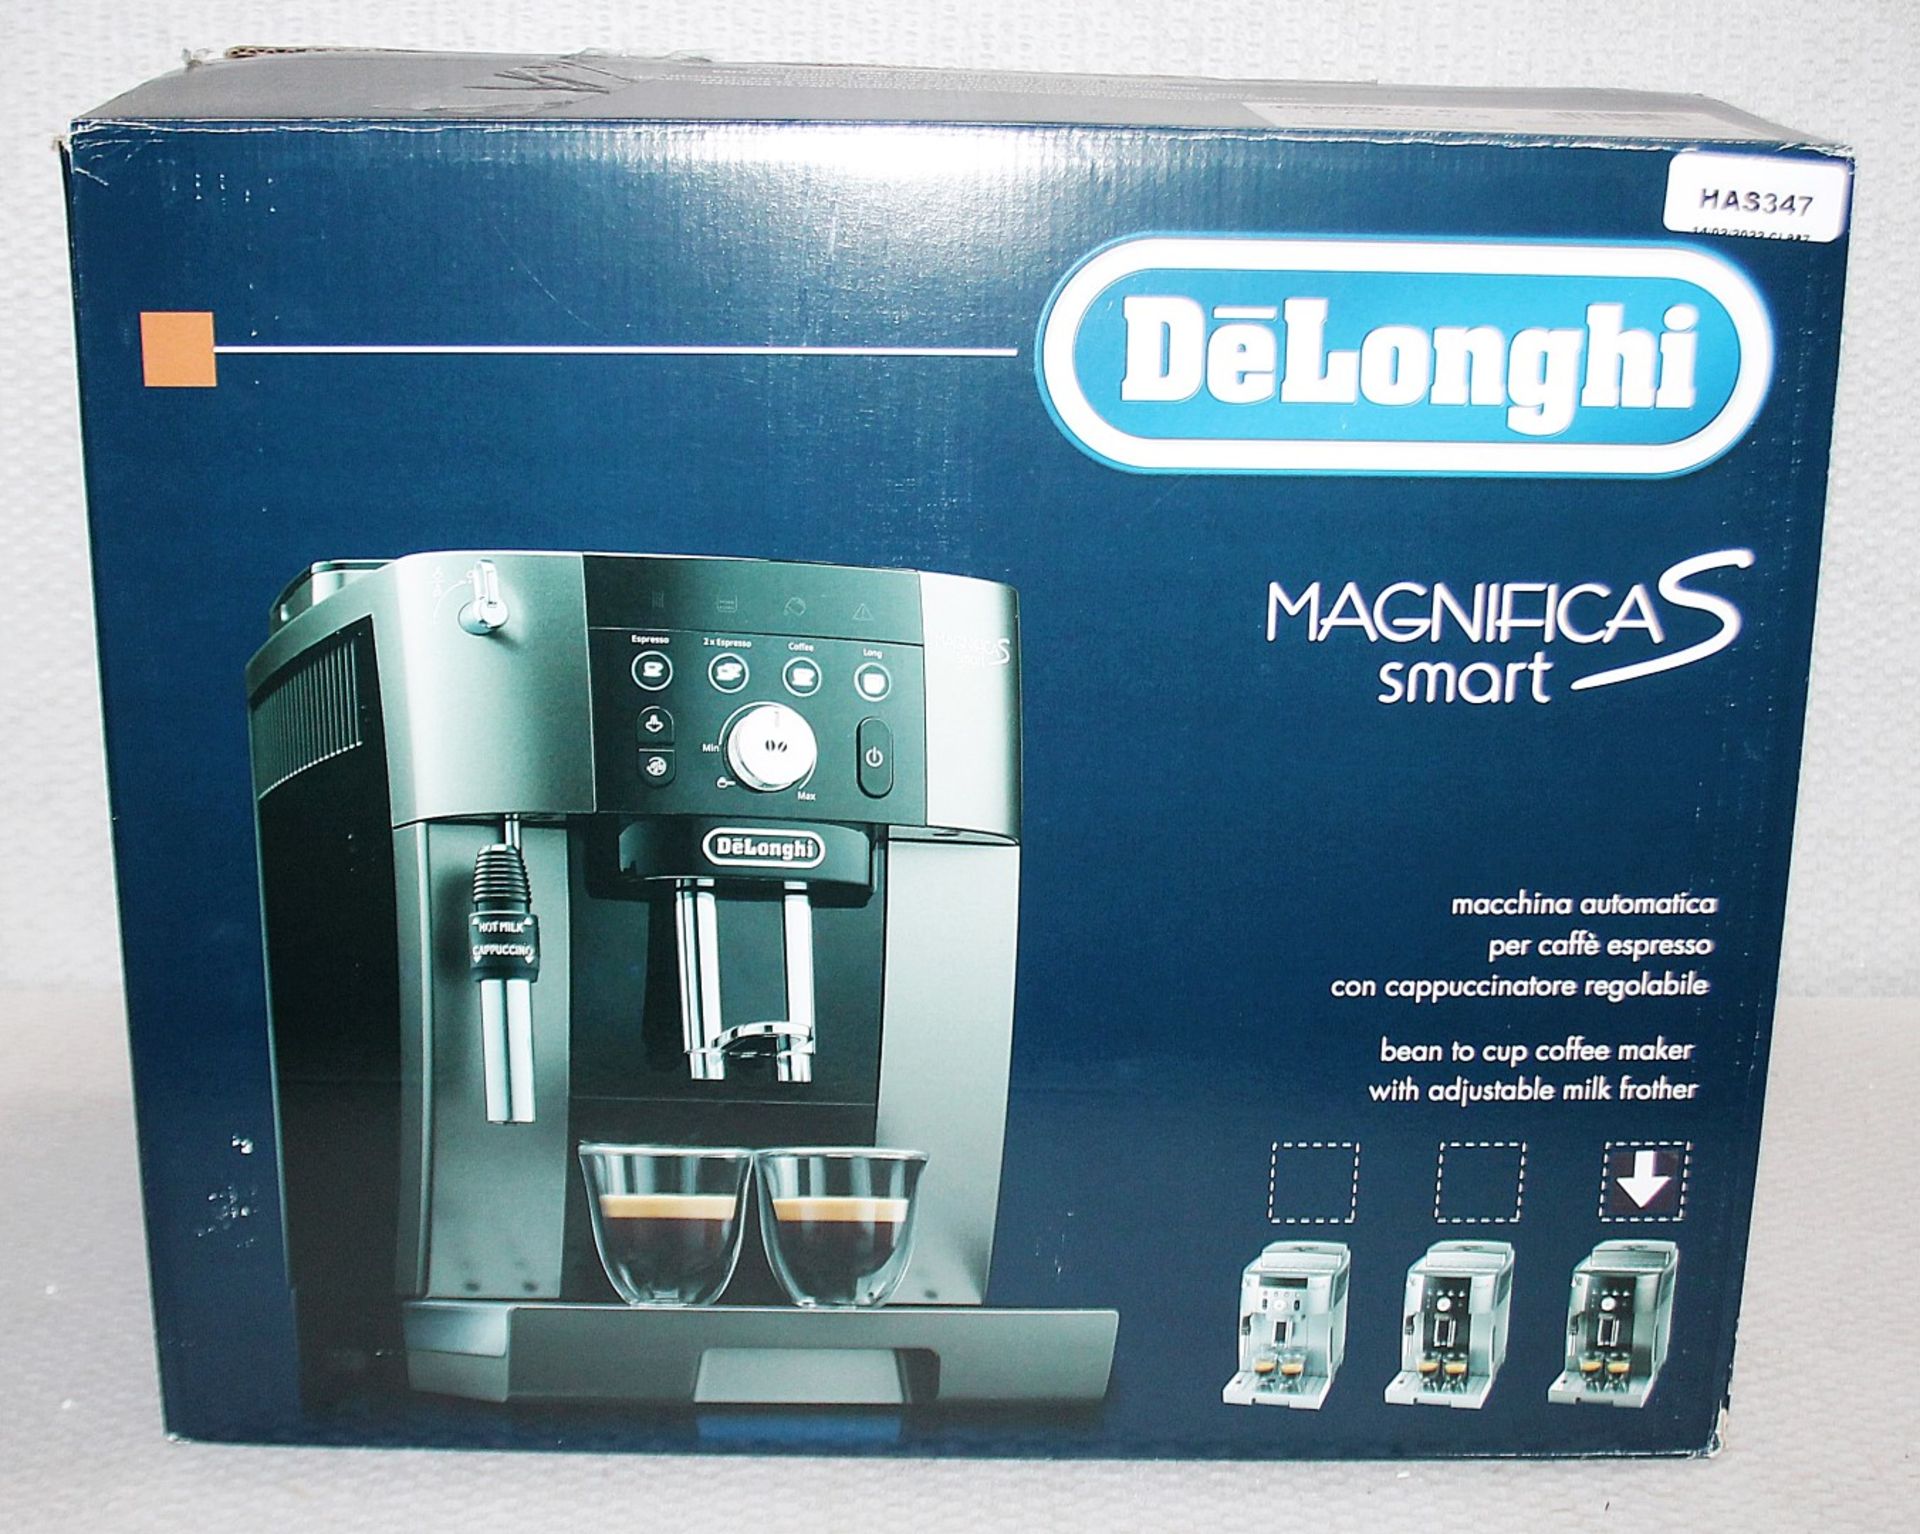 1 x DE'LONGHI Magnifica S Smart Coffee Machine - Boxed - Original Price £469.00 - Ref: HAS347 - Image 3 of 13